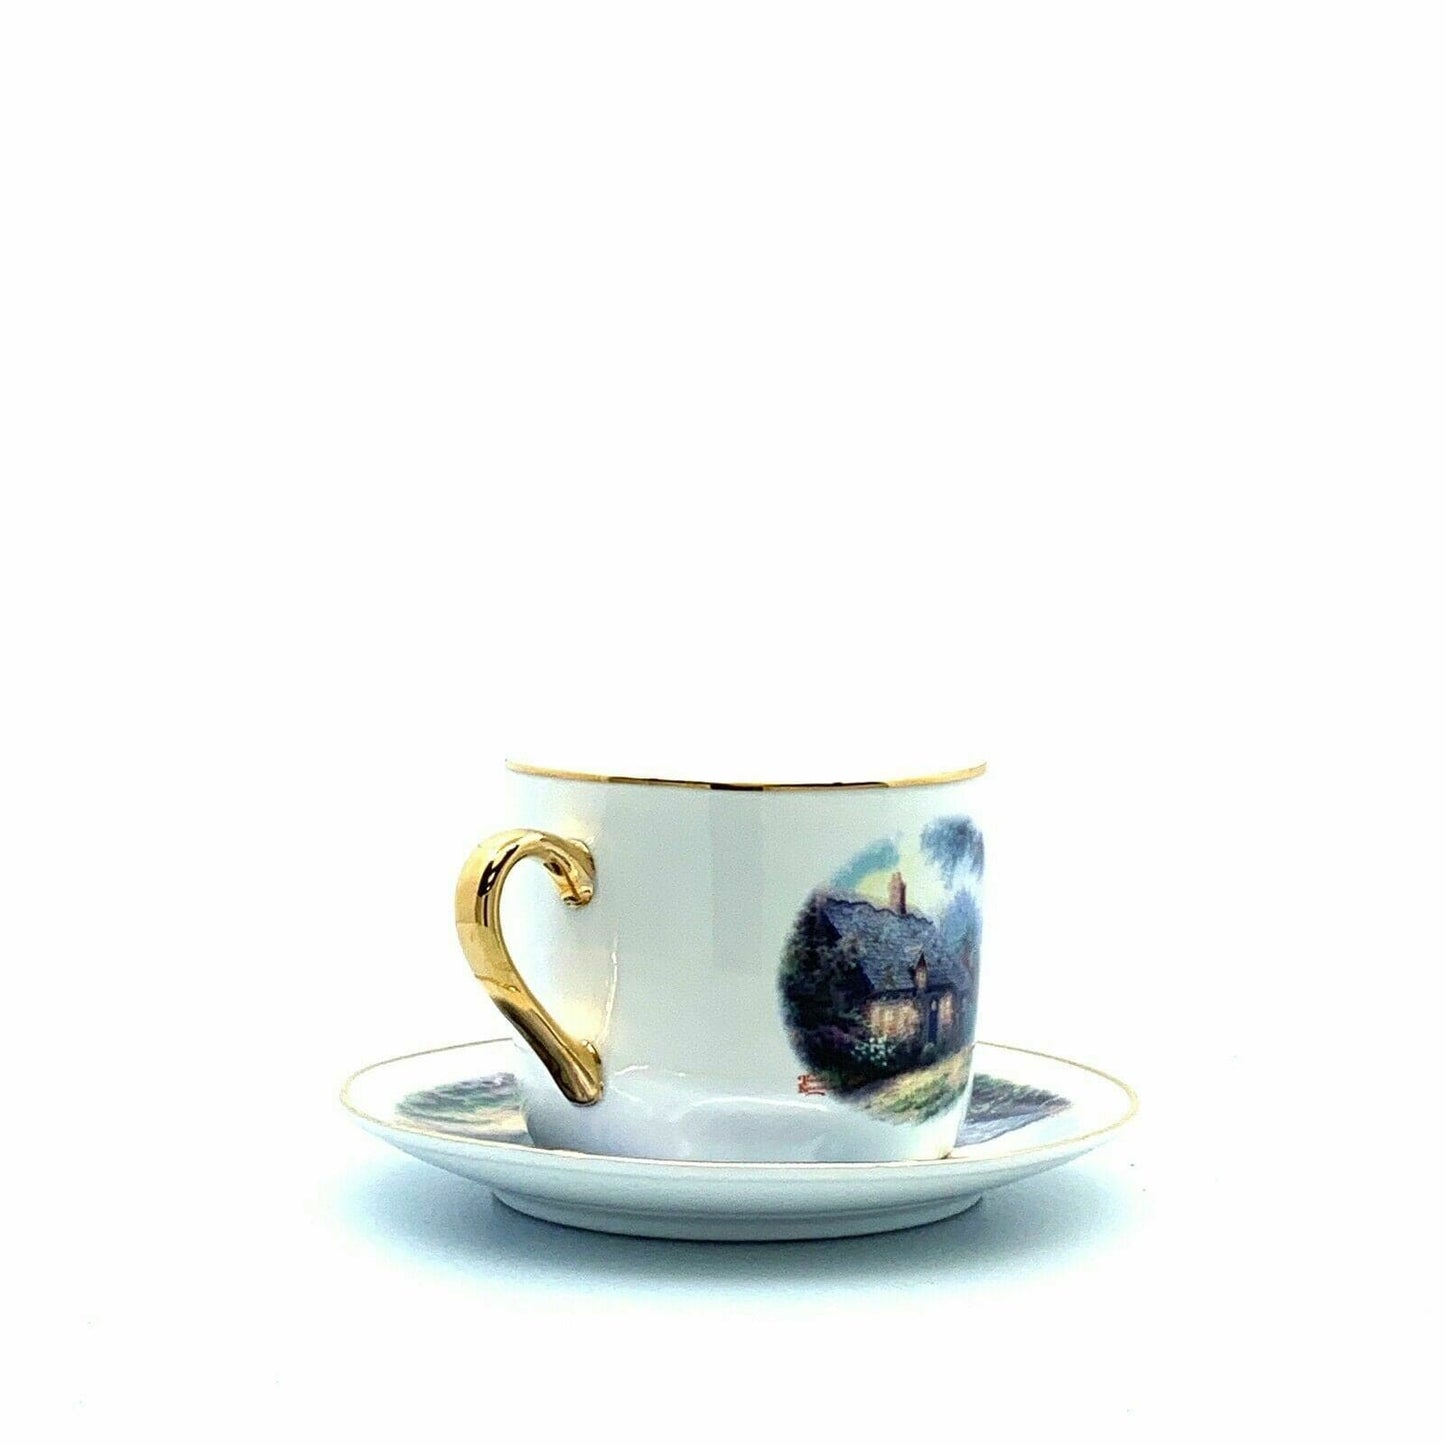 Thomas Kinkade Painter of Light “Moonlight Cottage” Porcelain Coffee Cup & Saucer Set